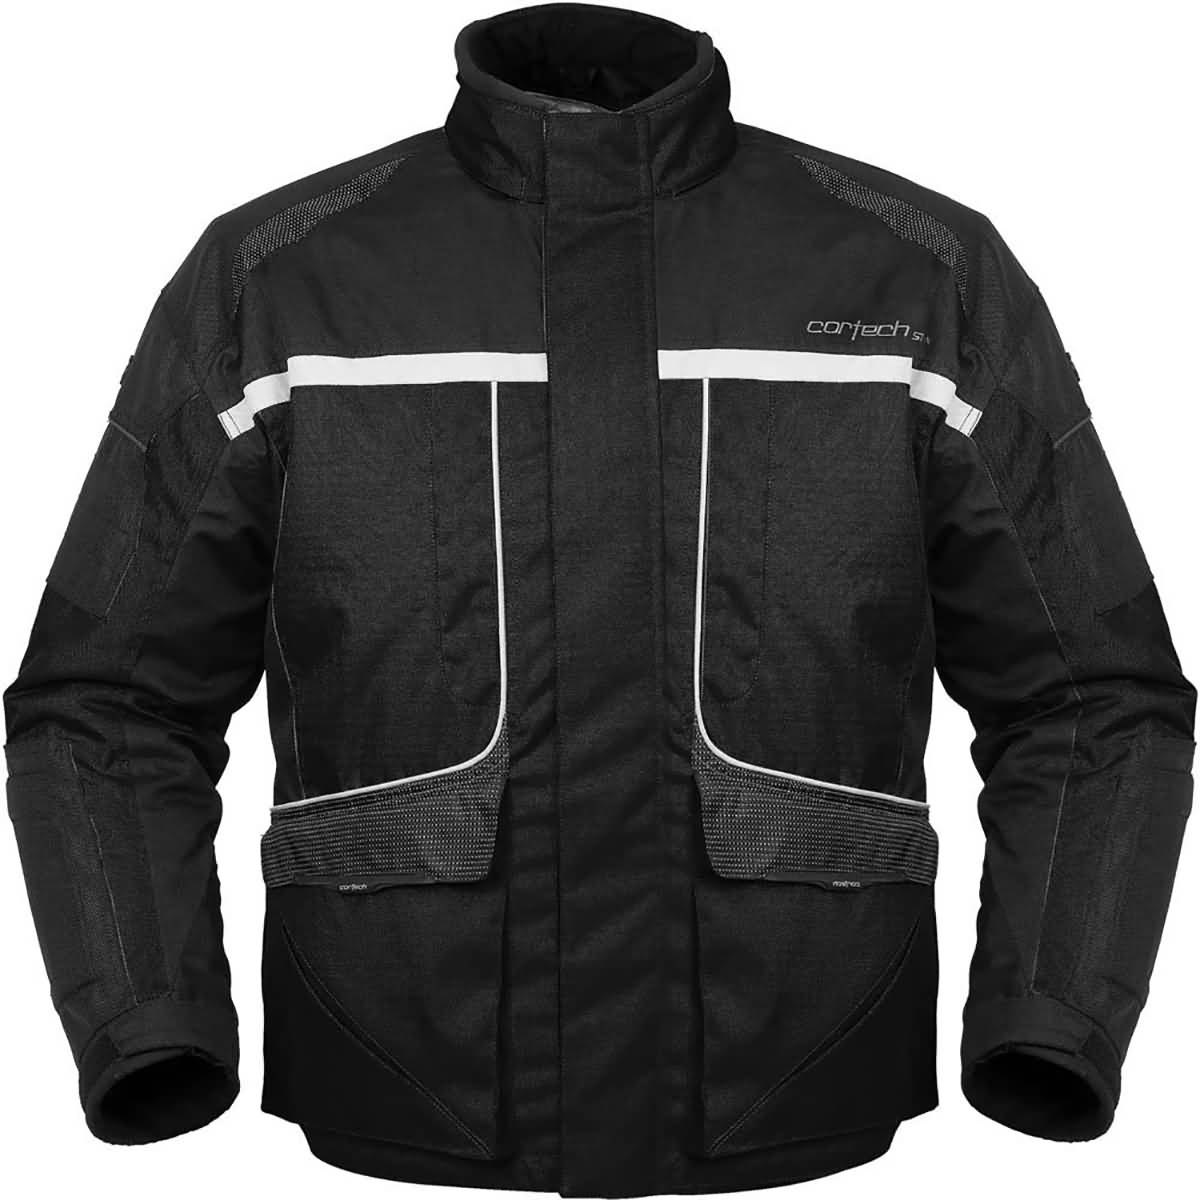 Cortech Cascade Men's Snow Jackets-8700